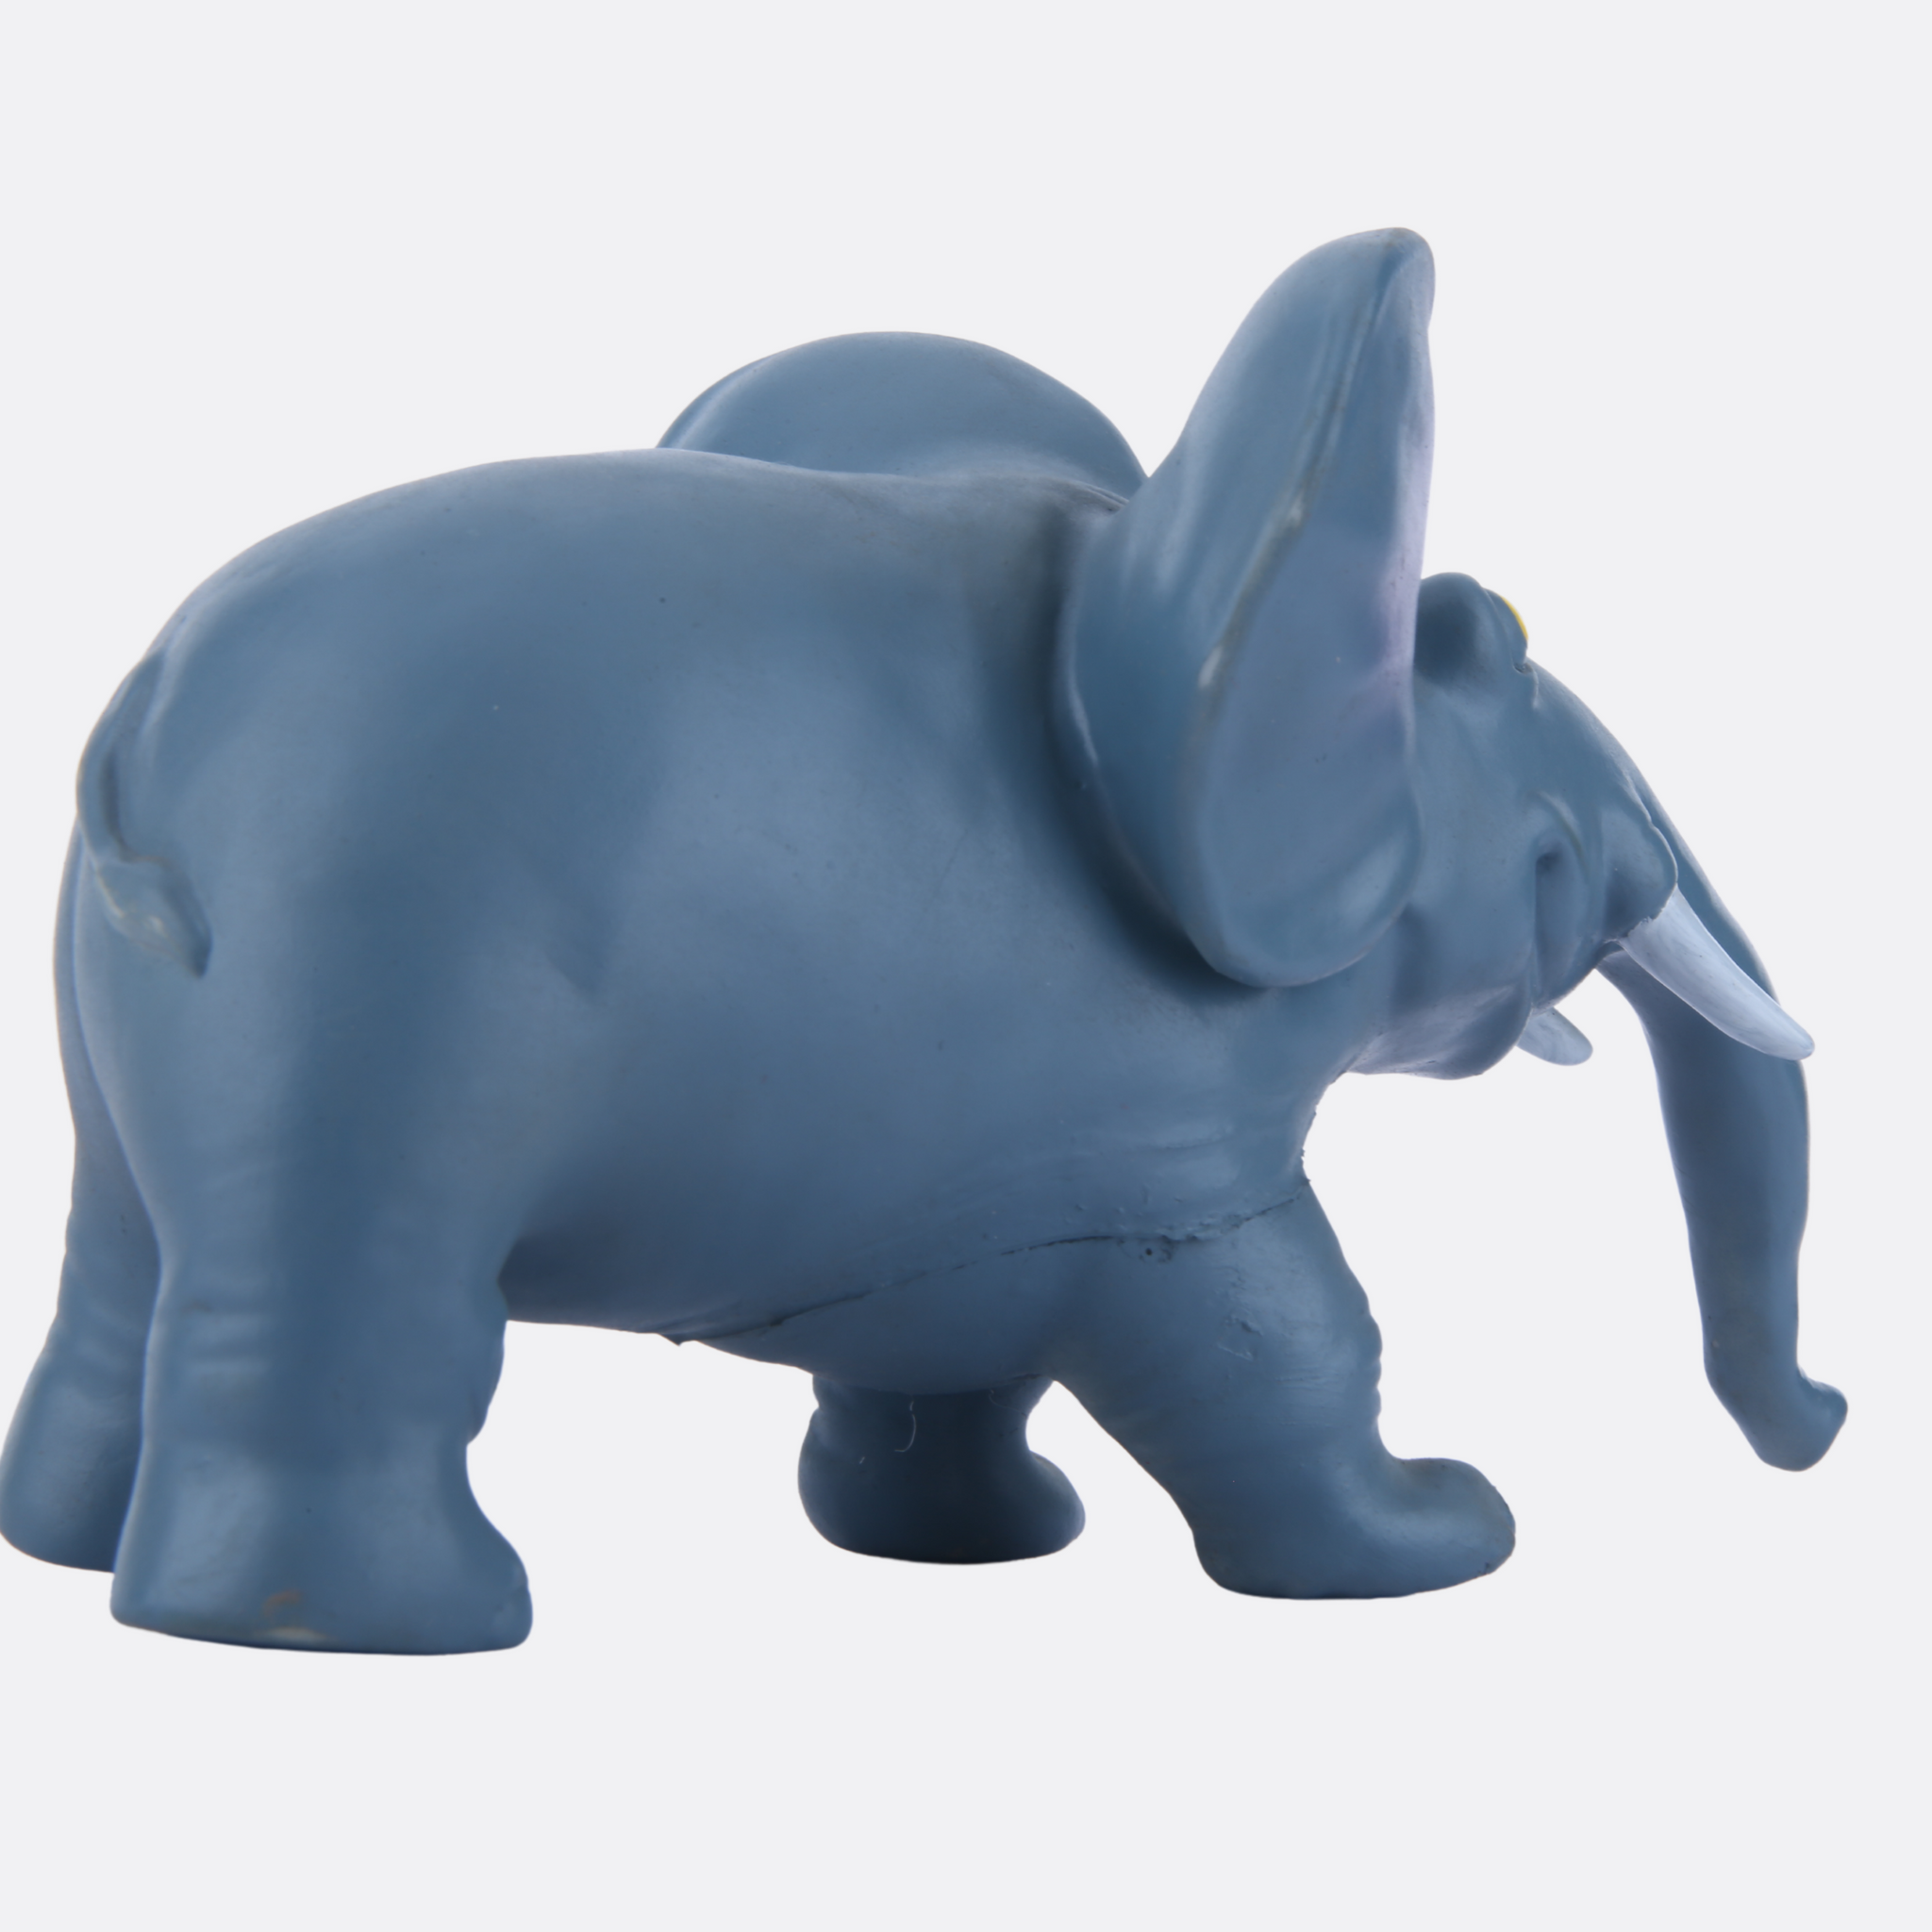 Squishy Elephant toy